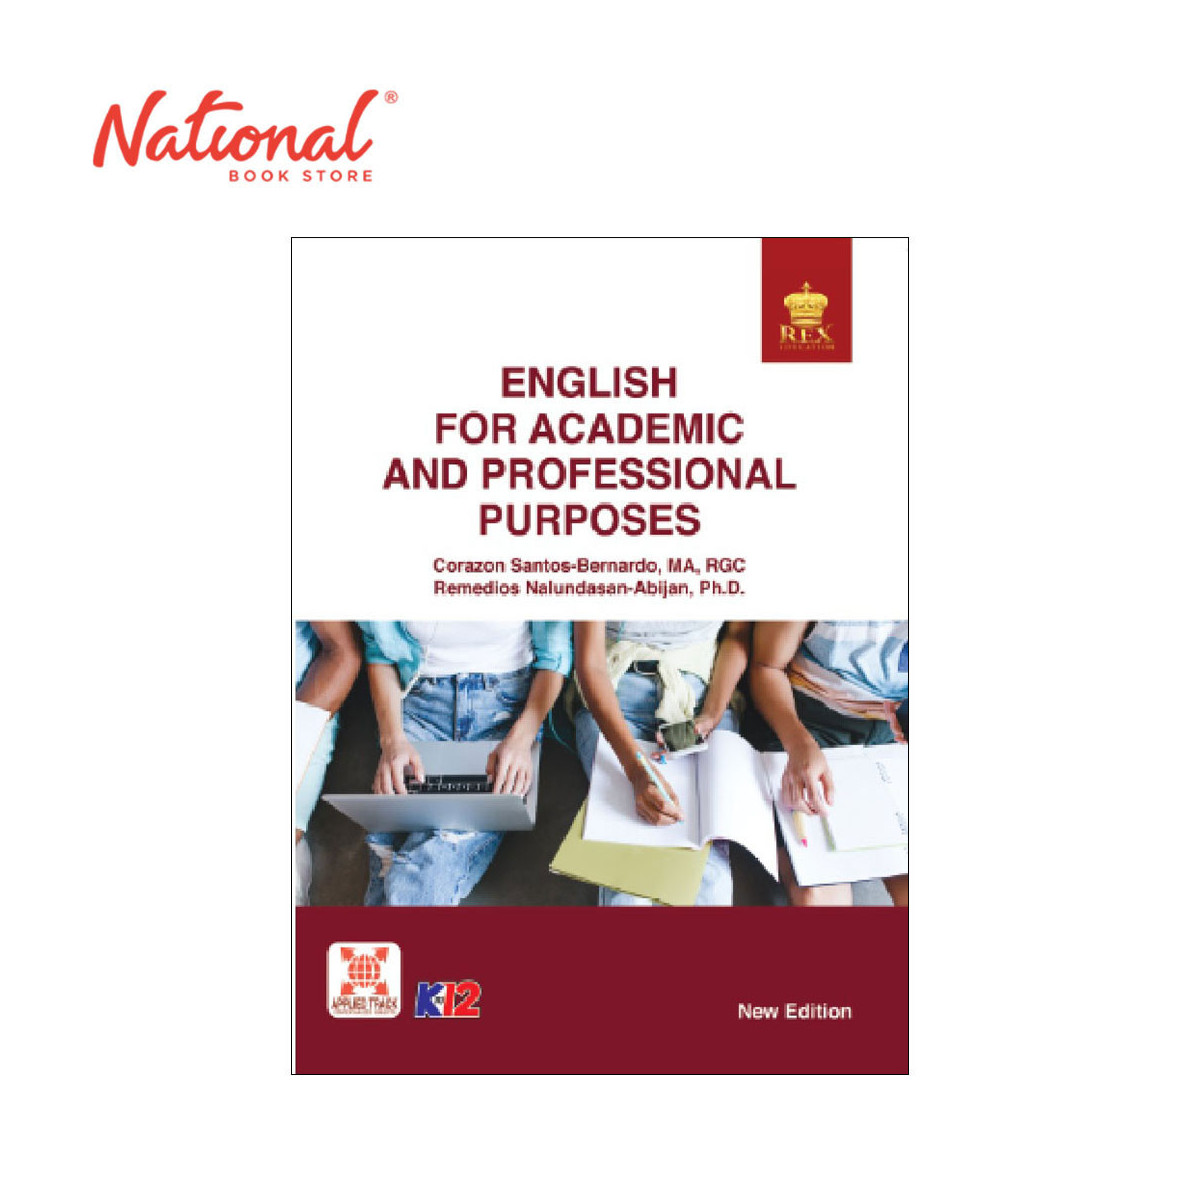 English for Academic & Professional Purposes by Corazon Santos-Bernardo - Trade Paperback